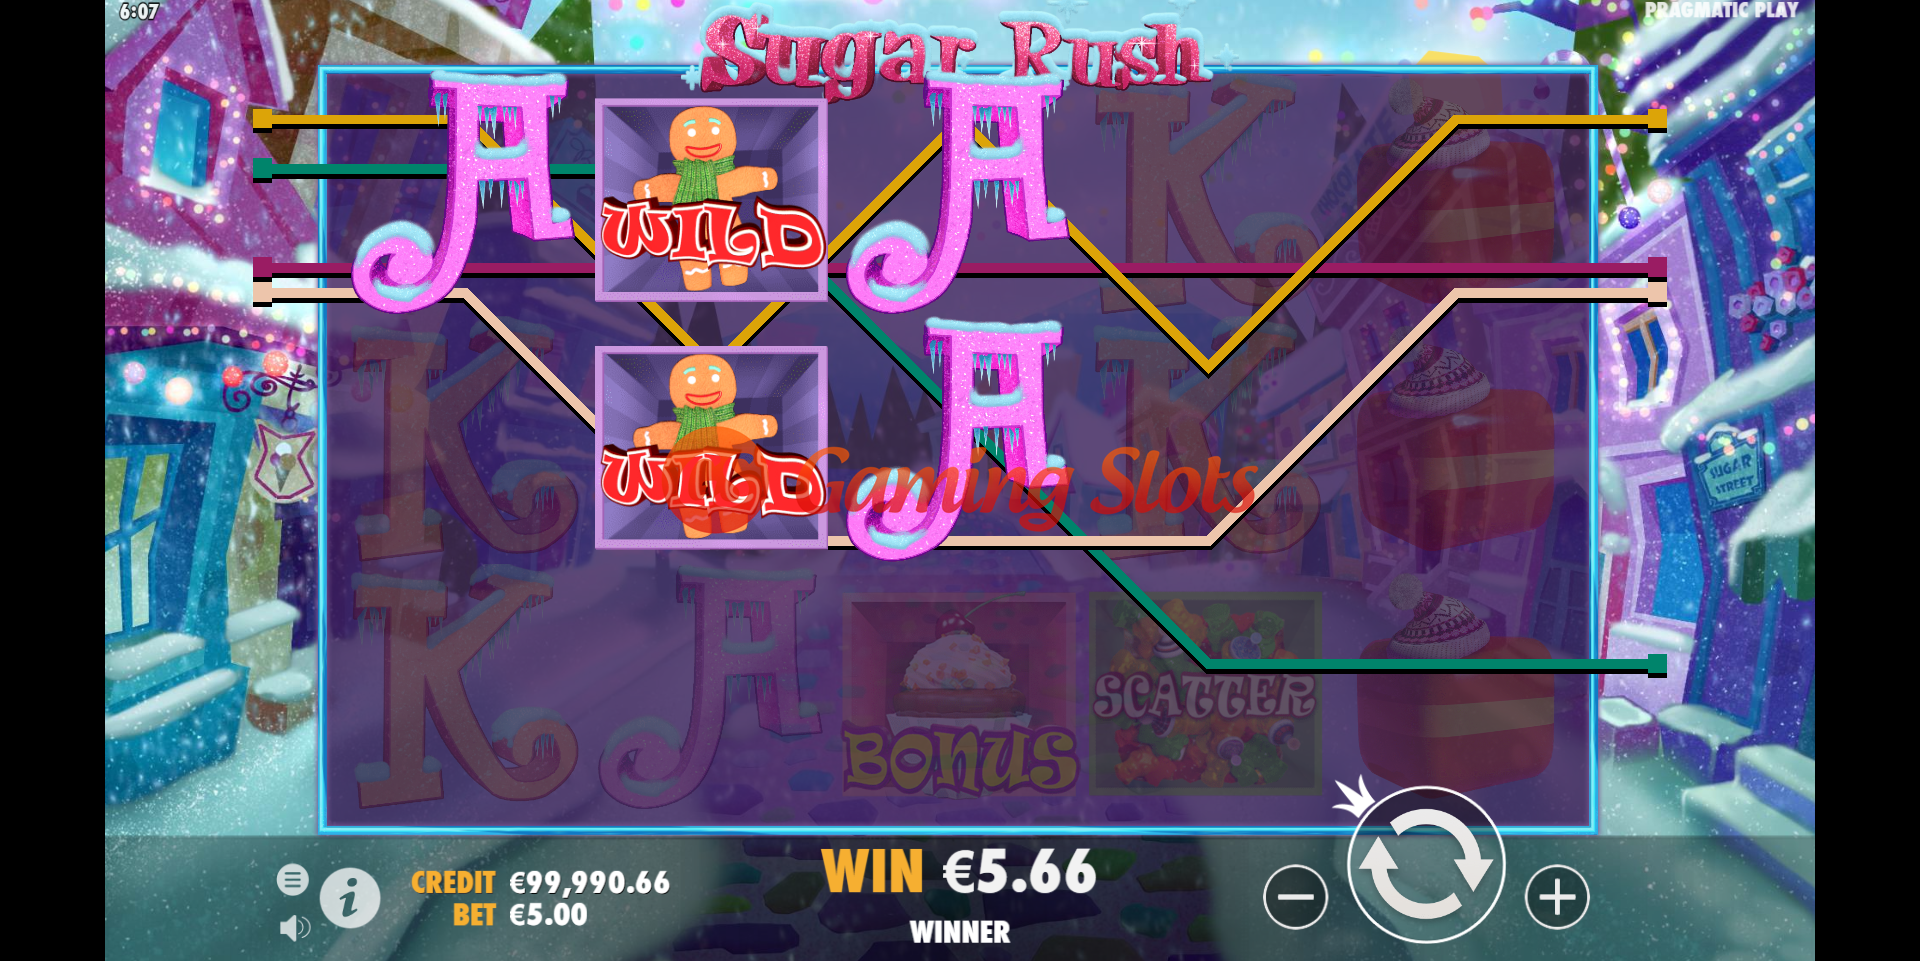 Base Game for Sugar Rush Winter slot from Pragmatic Play